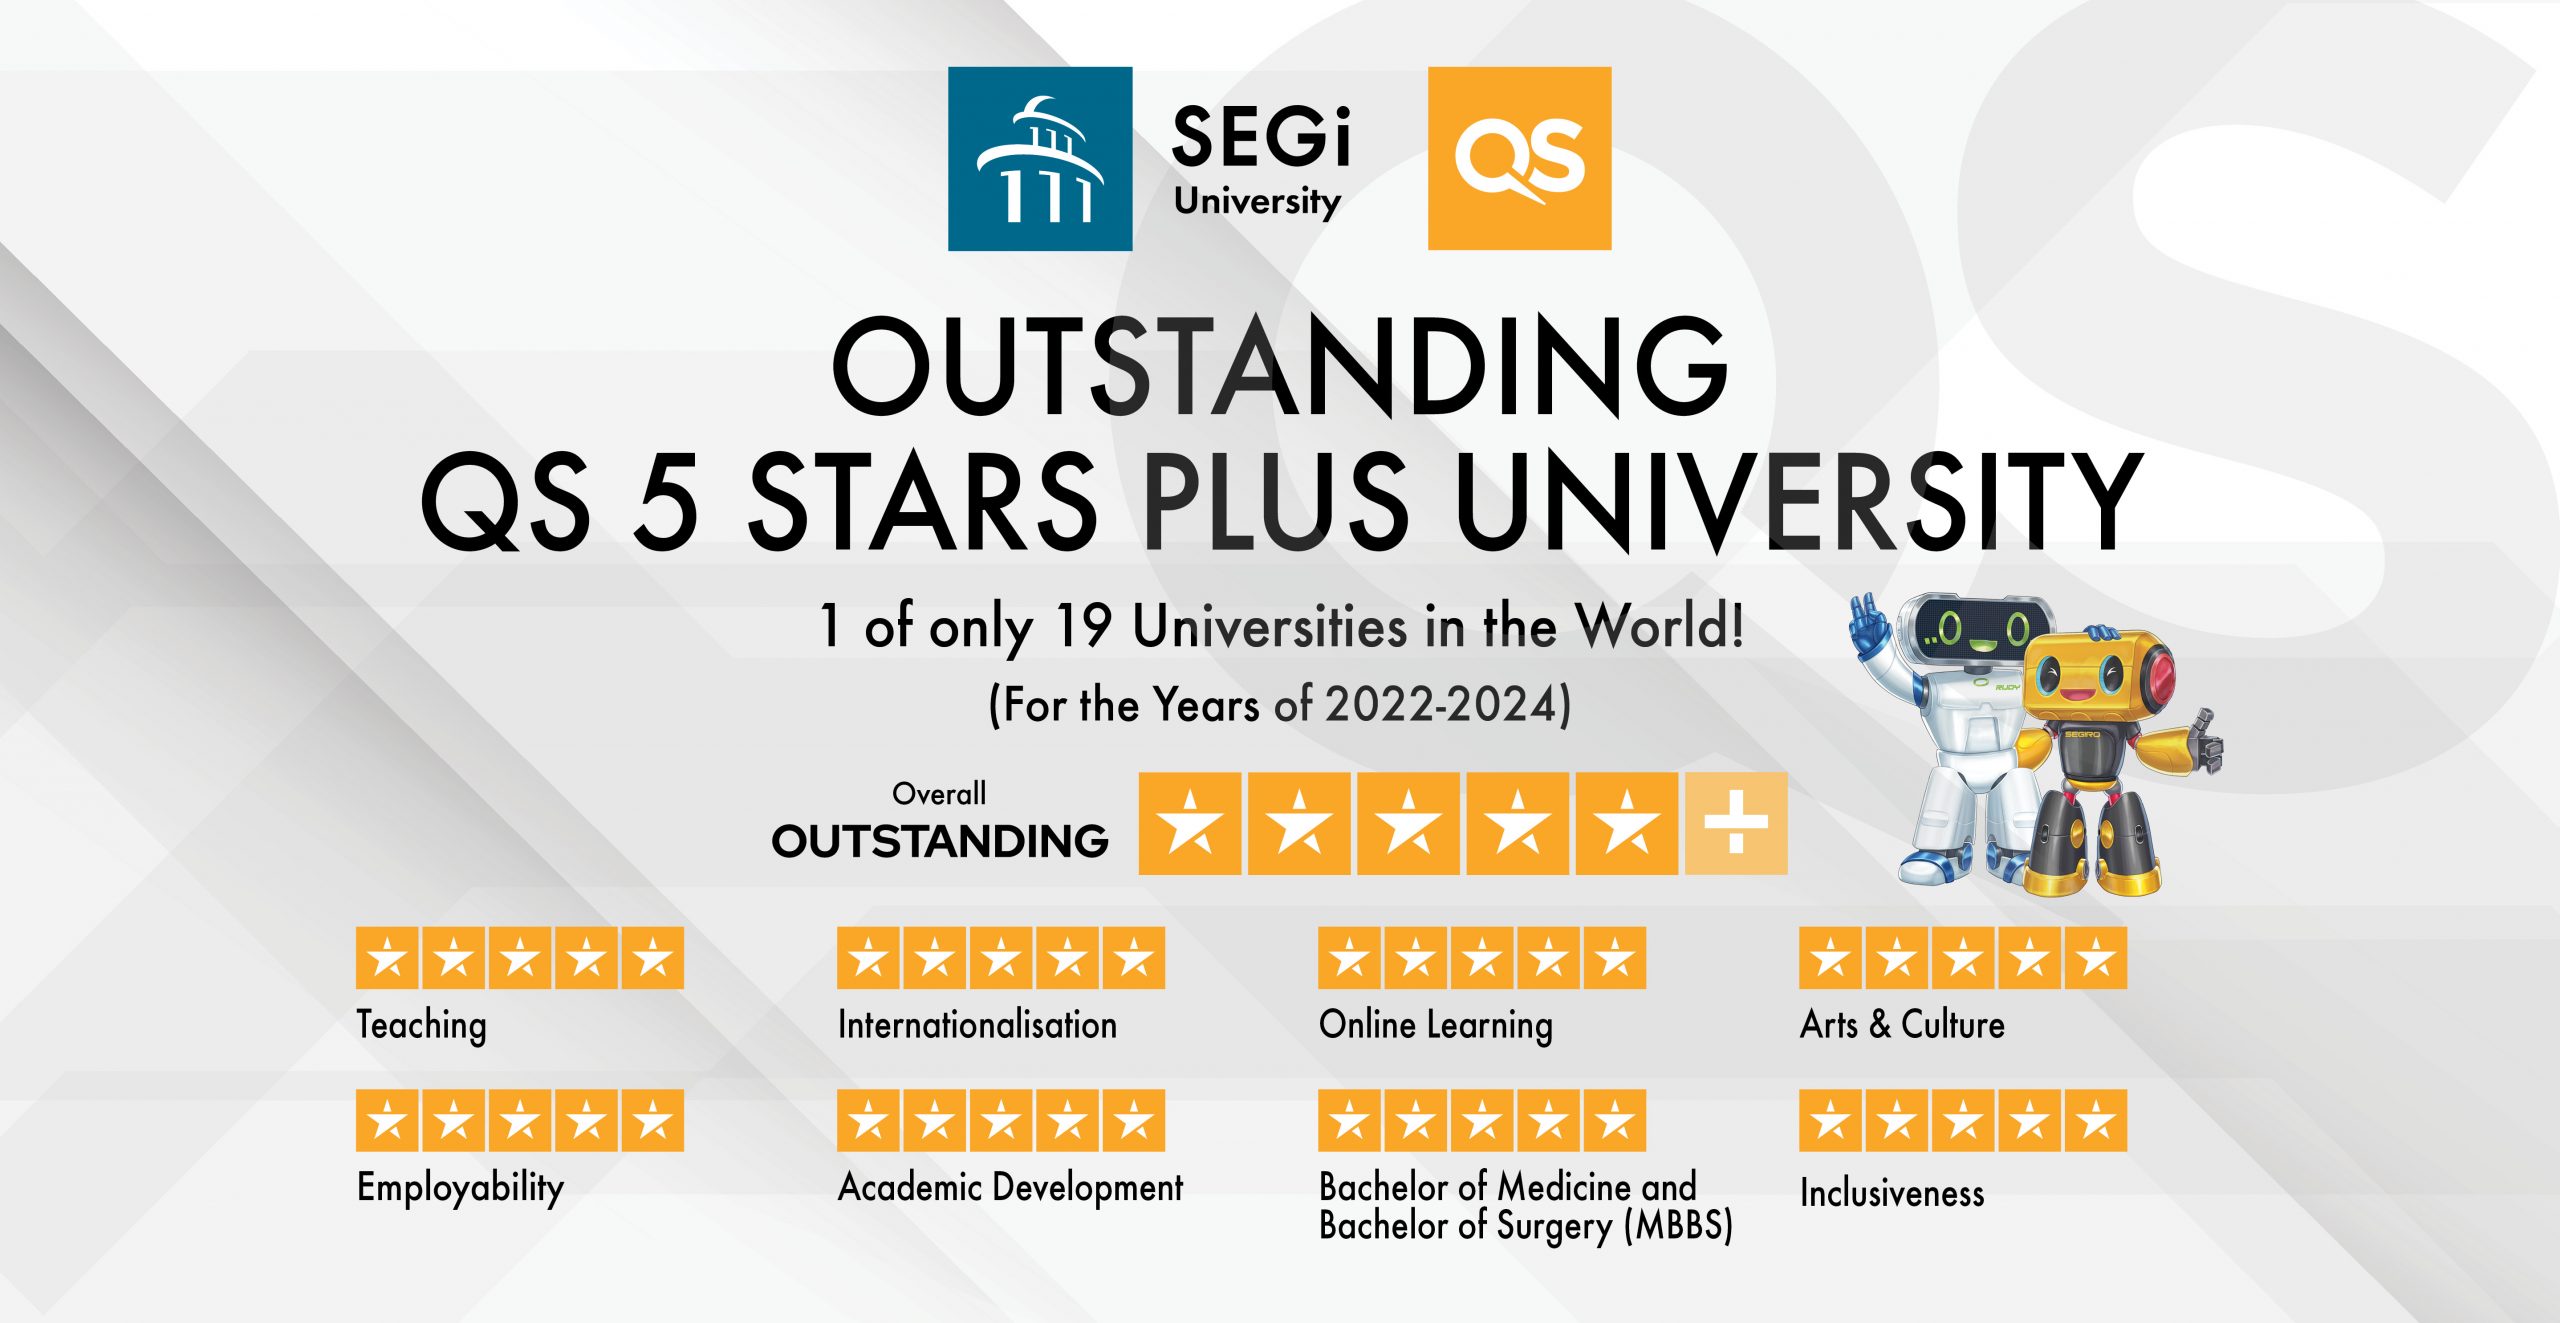 Qs world university rankings 2021